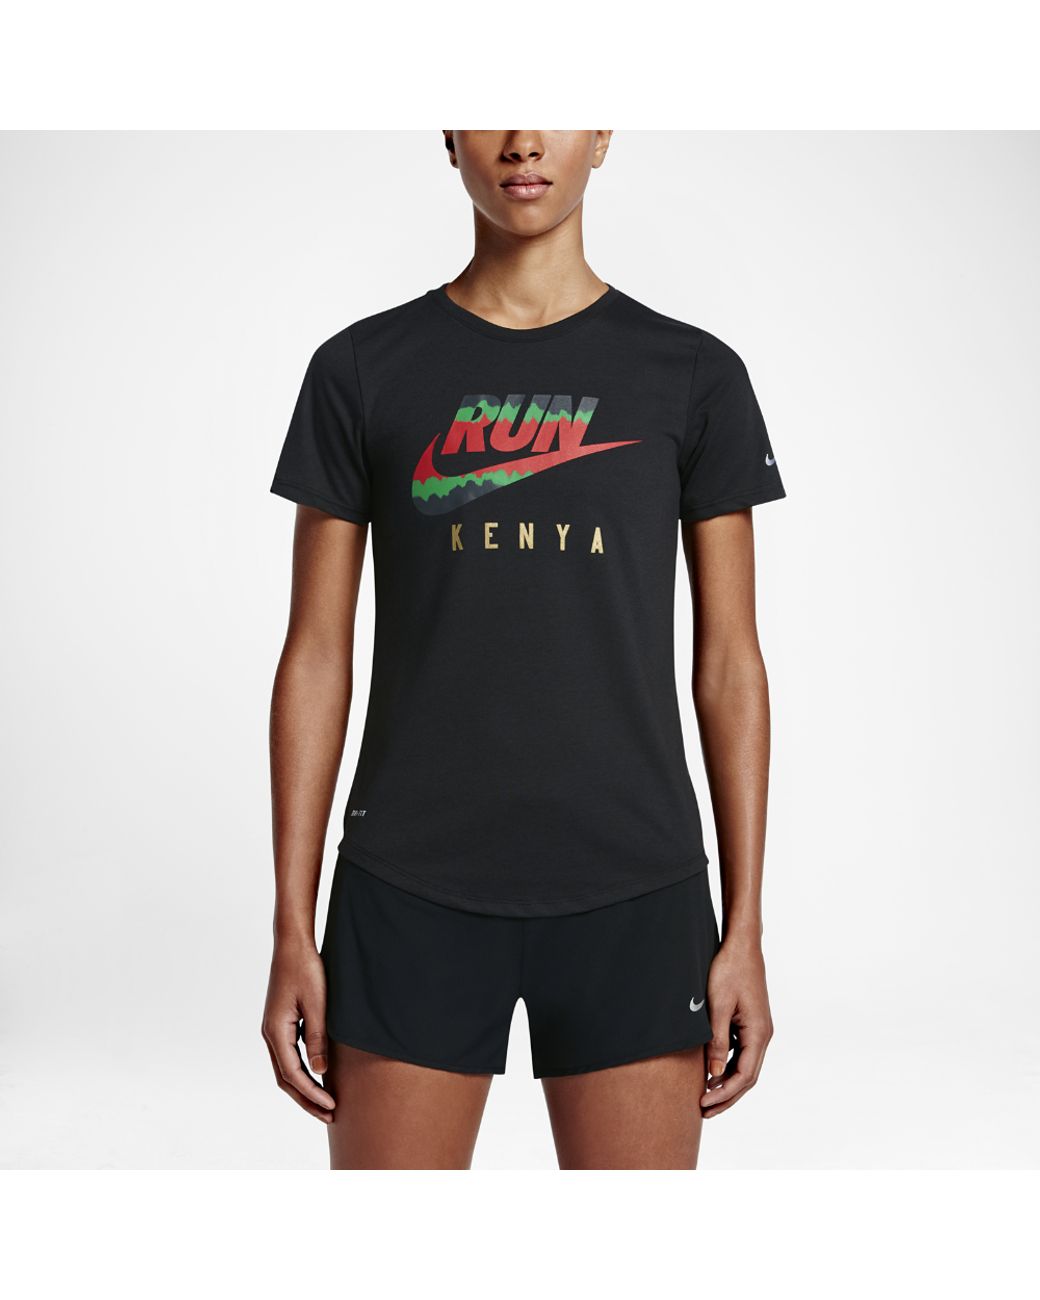 Nike (kenya) Women's Running T-shirt in Black | Lyst